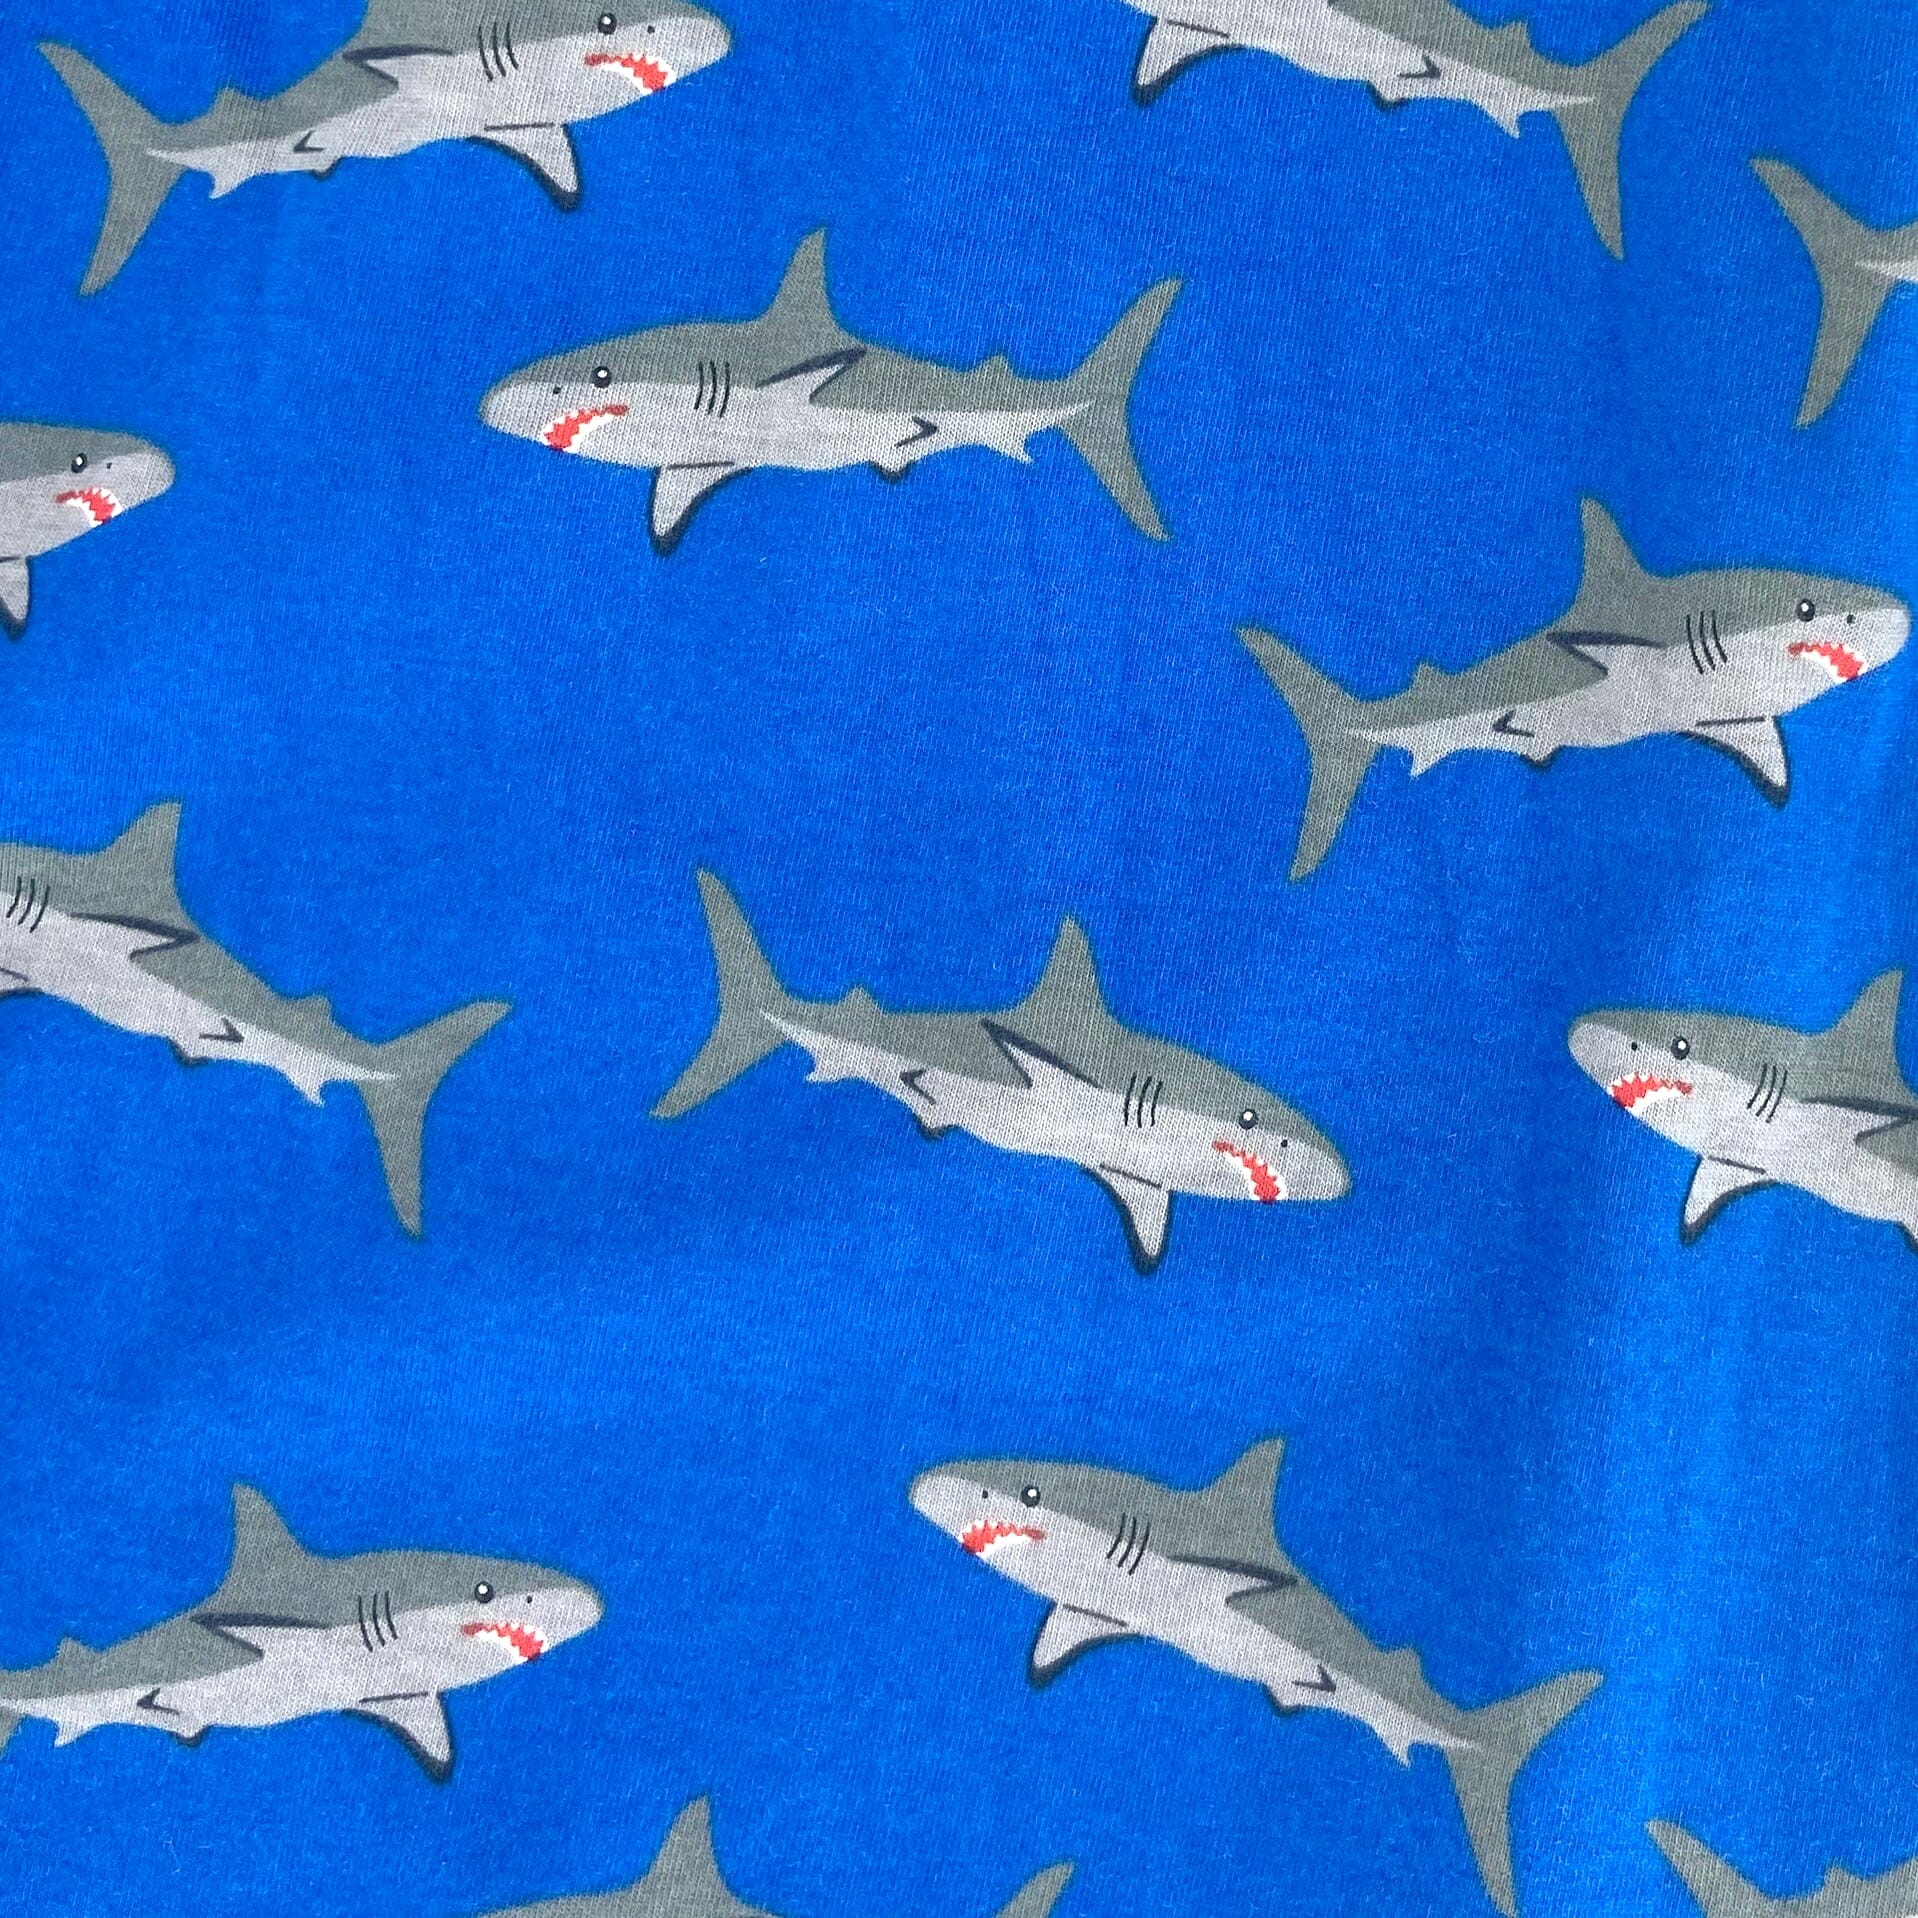 Men's Shark All Over Print Soft Cotton Knit Long Pajama Pant Bottoms